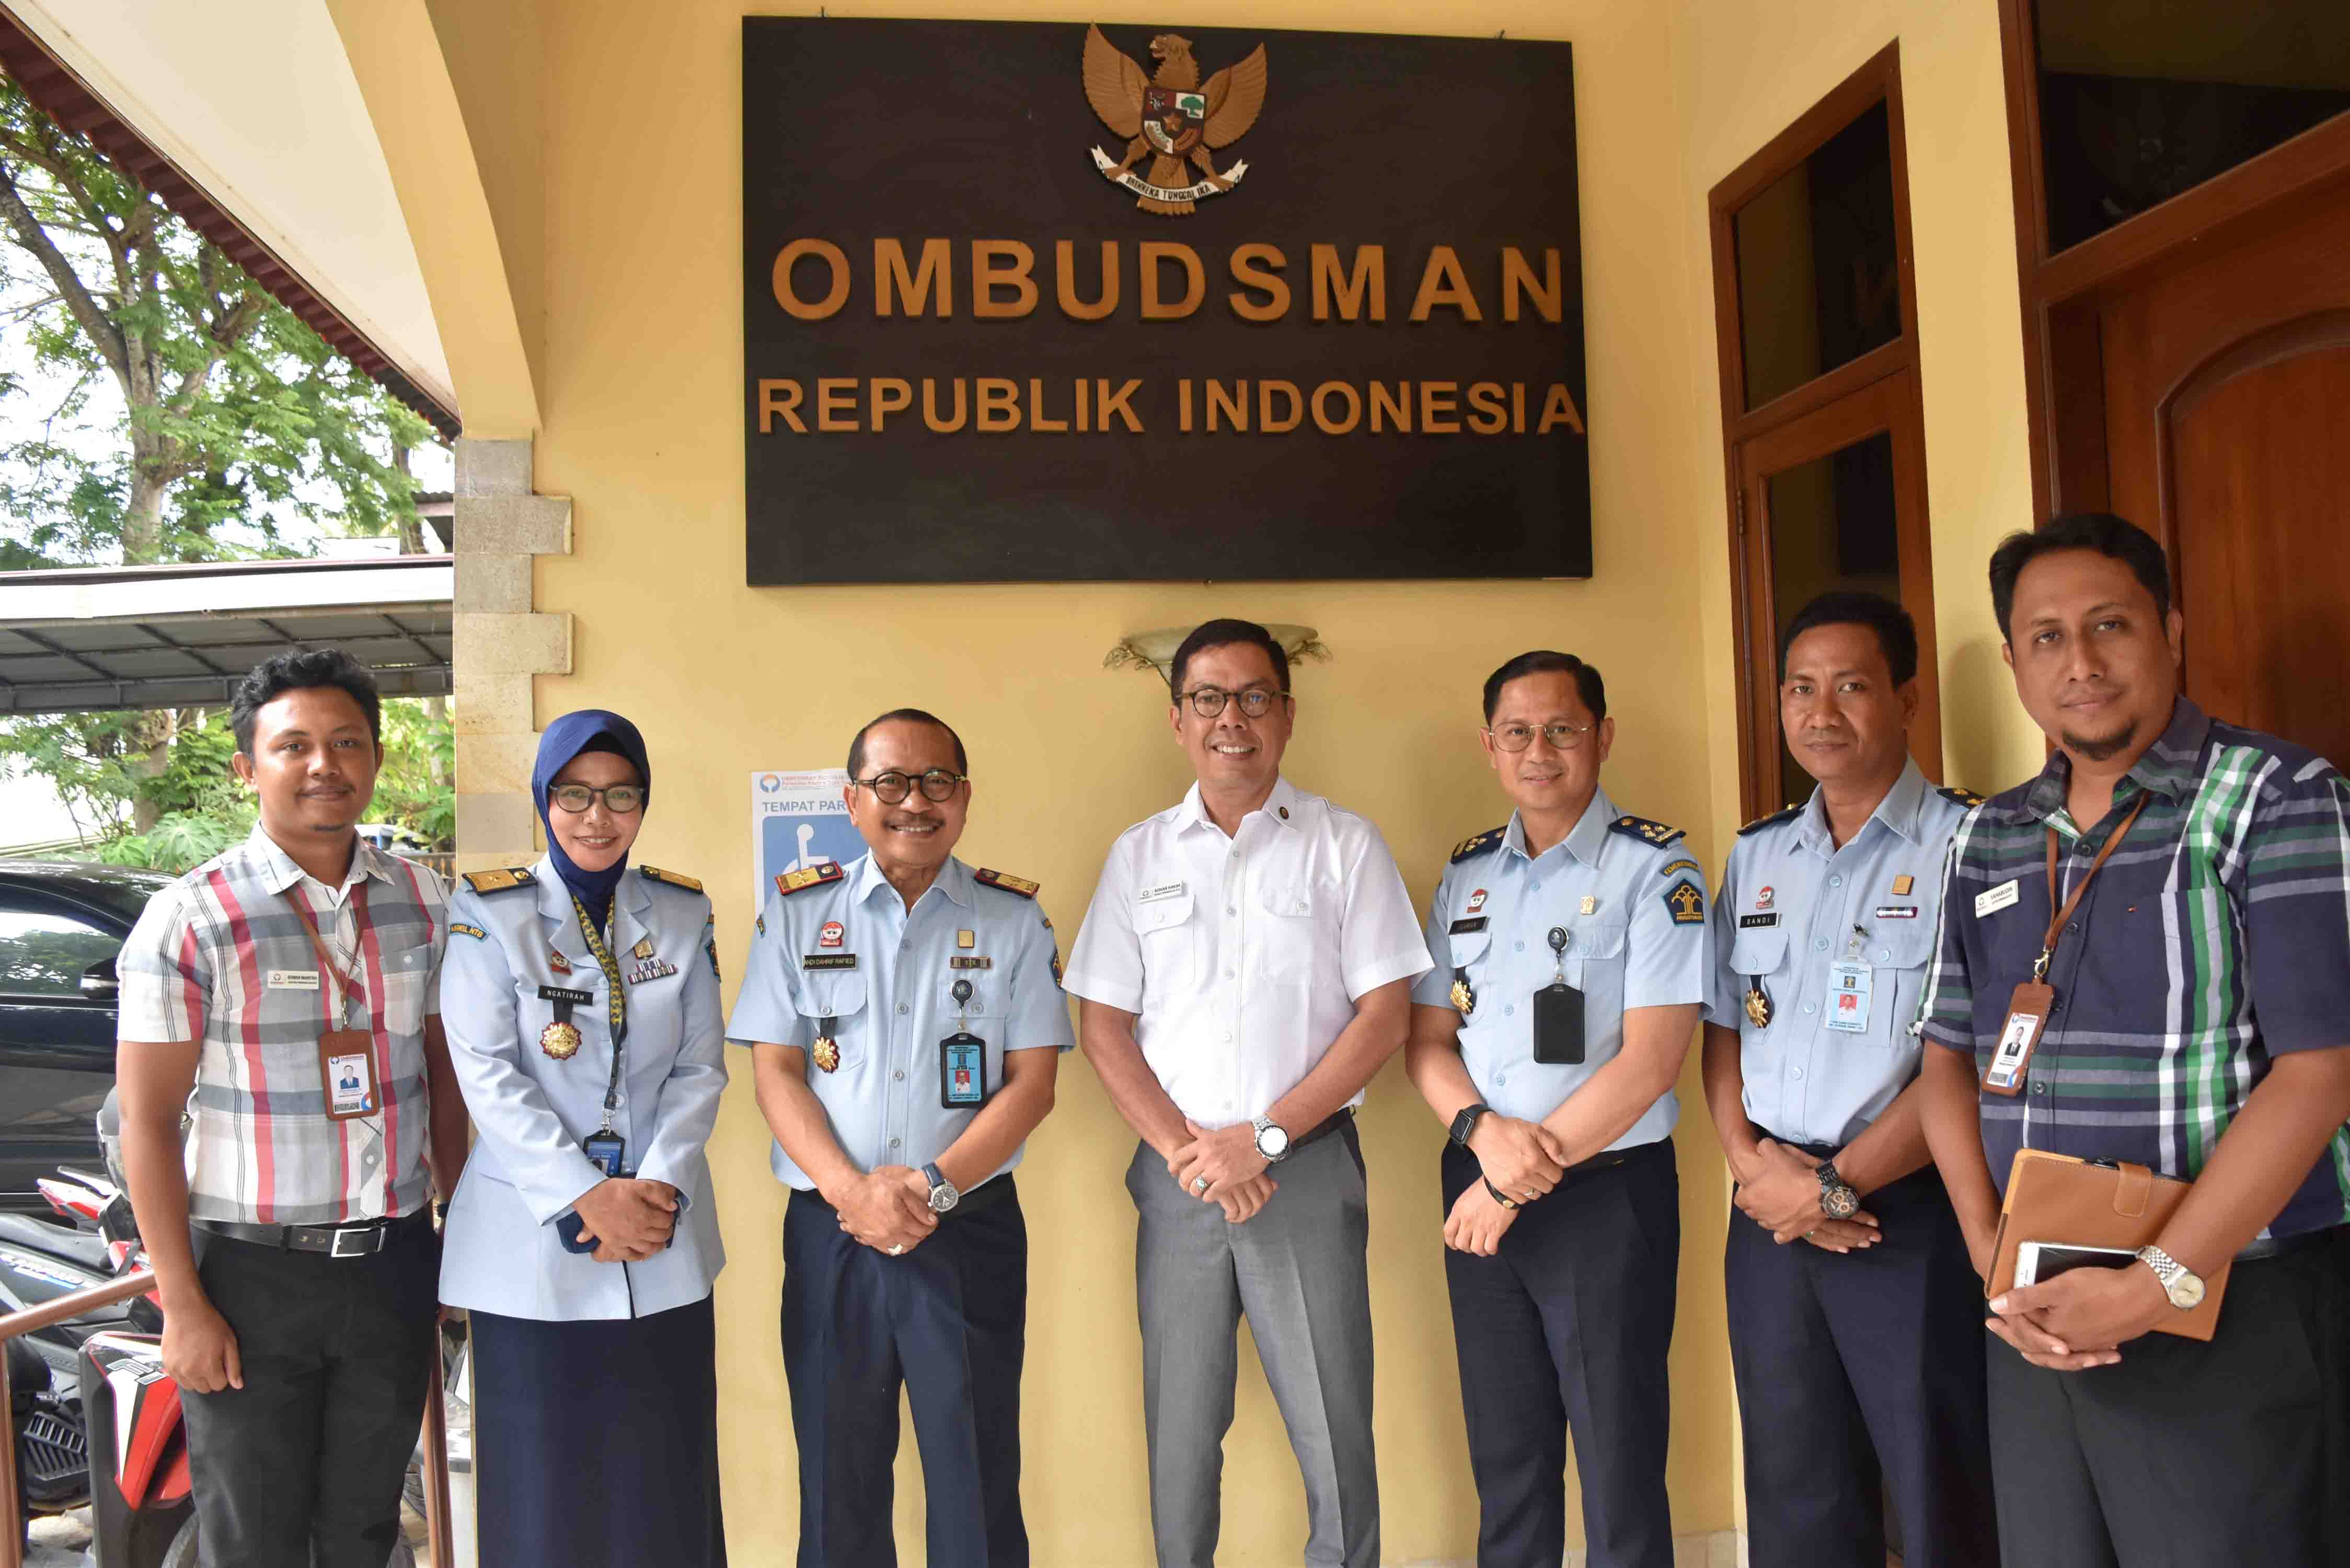 2019-11-12 ombudsman 02.jpg